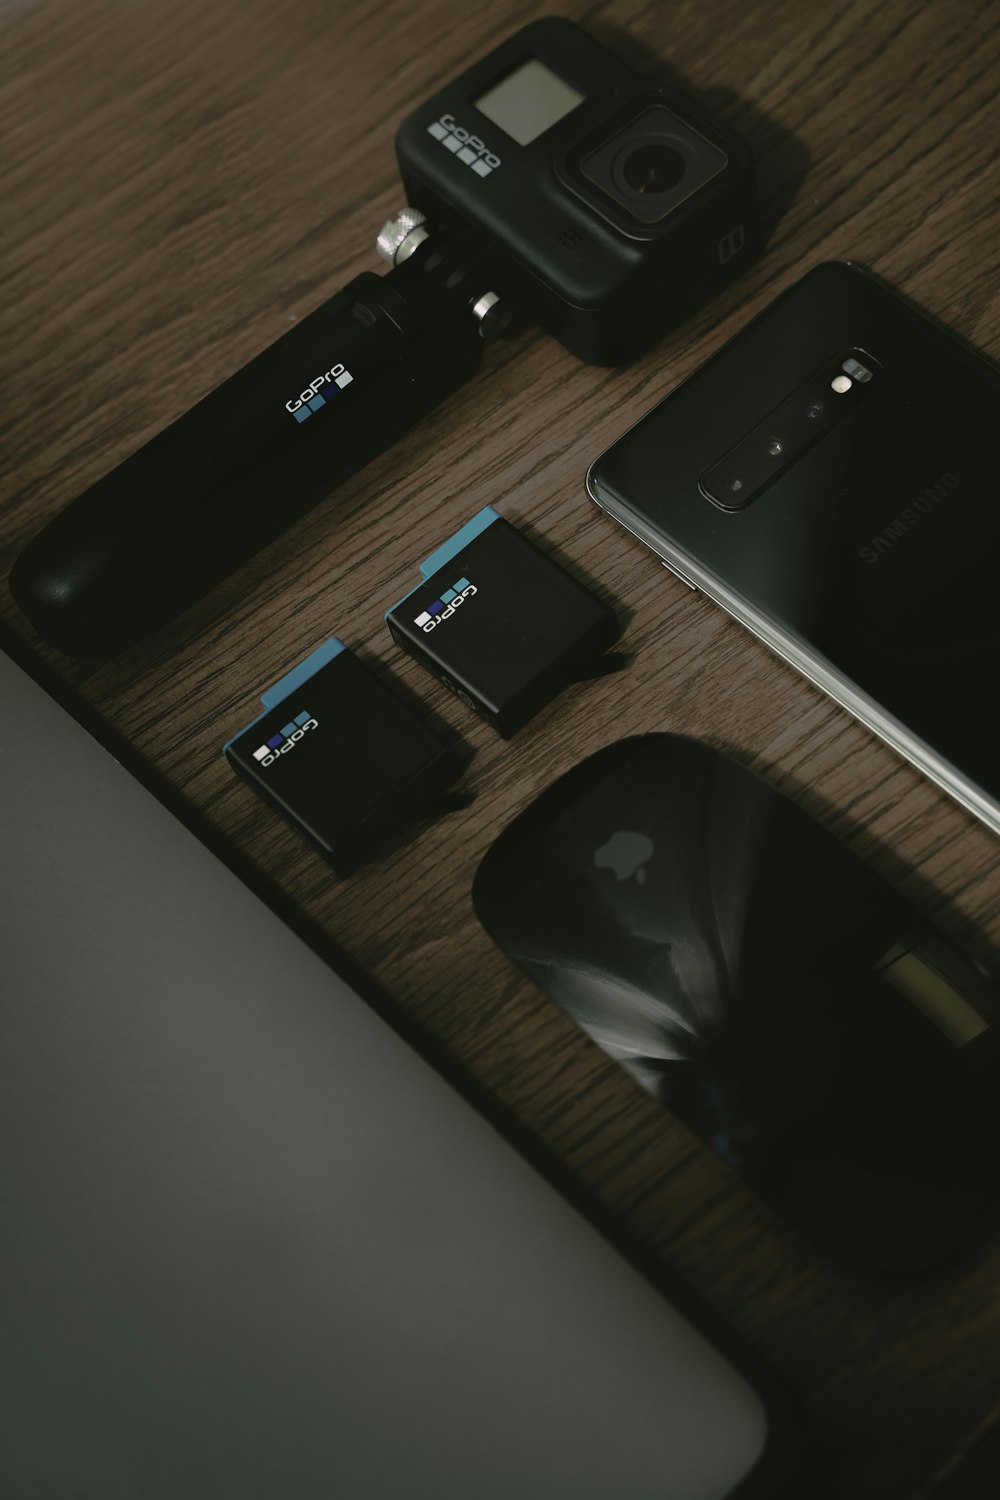 black iphone 7 plus beside black camera on brown wooden table